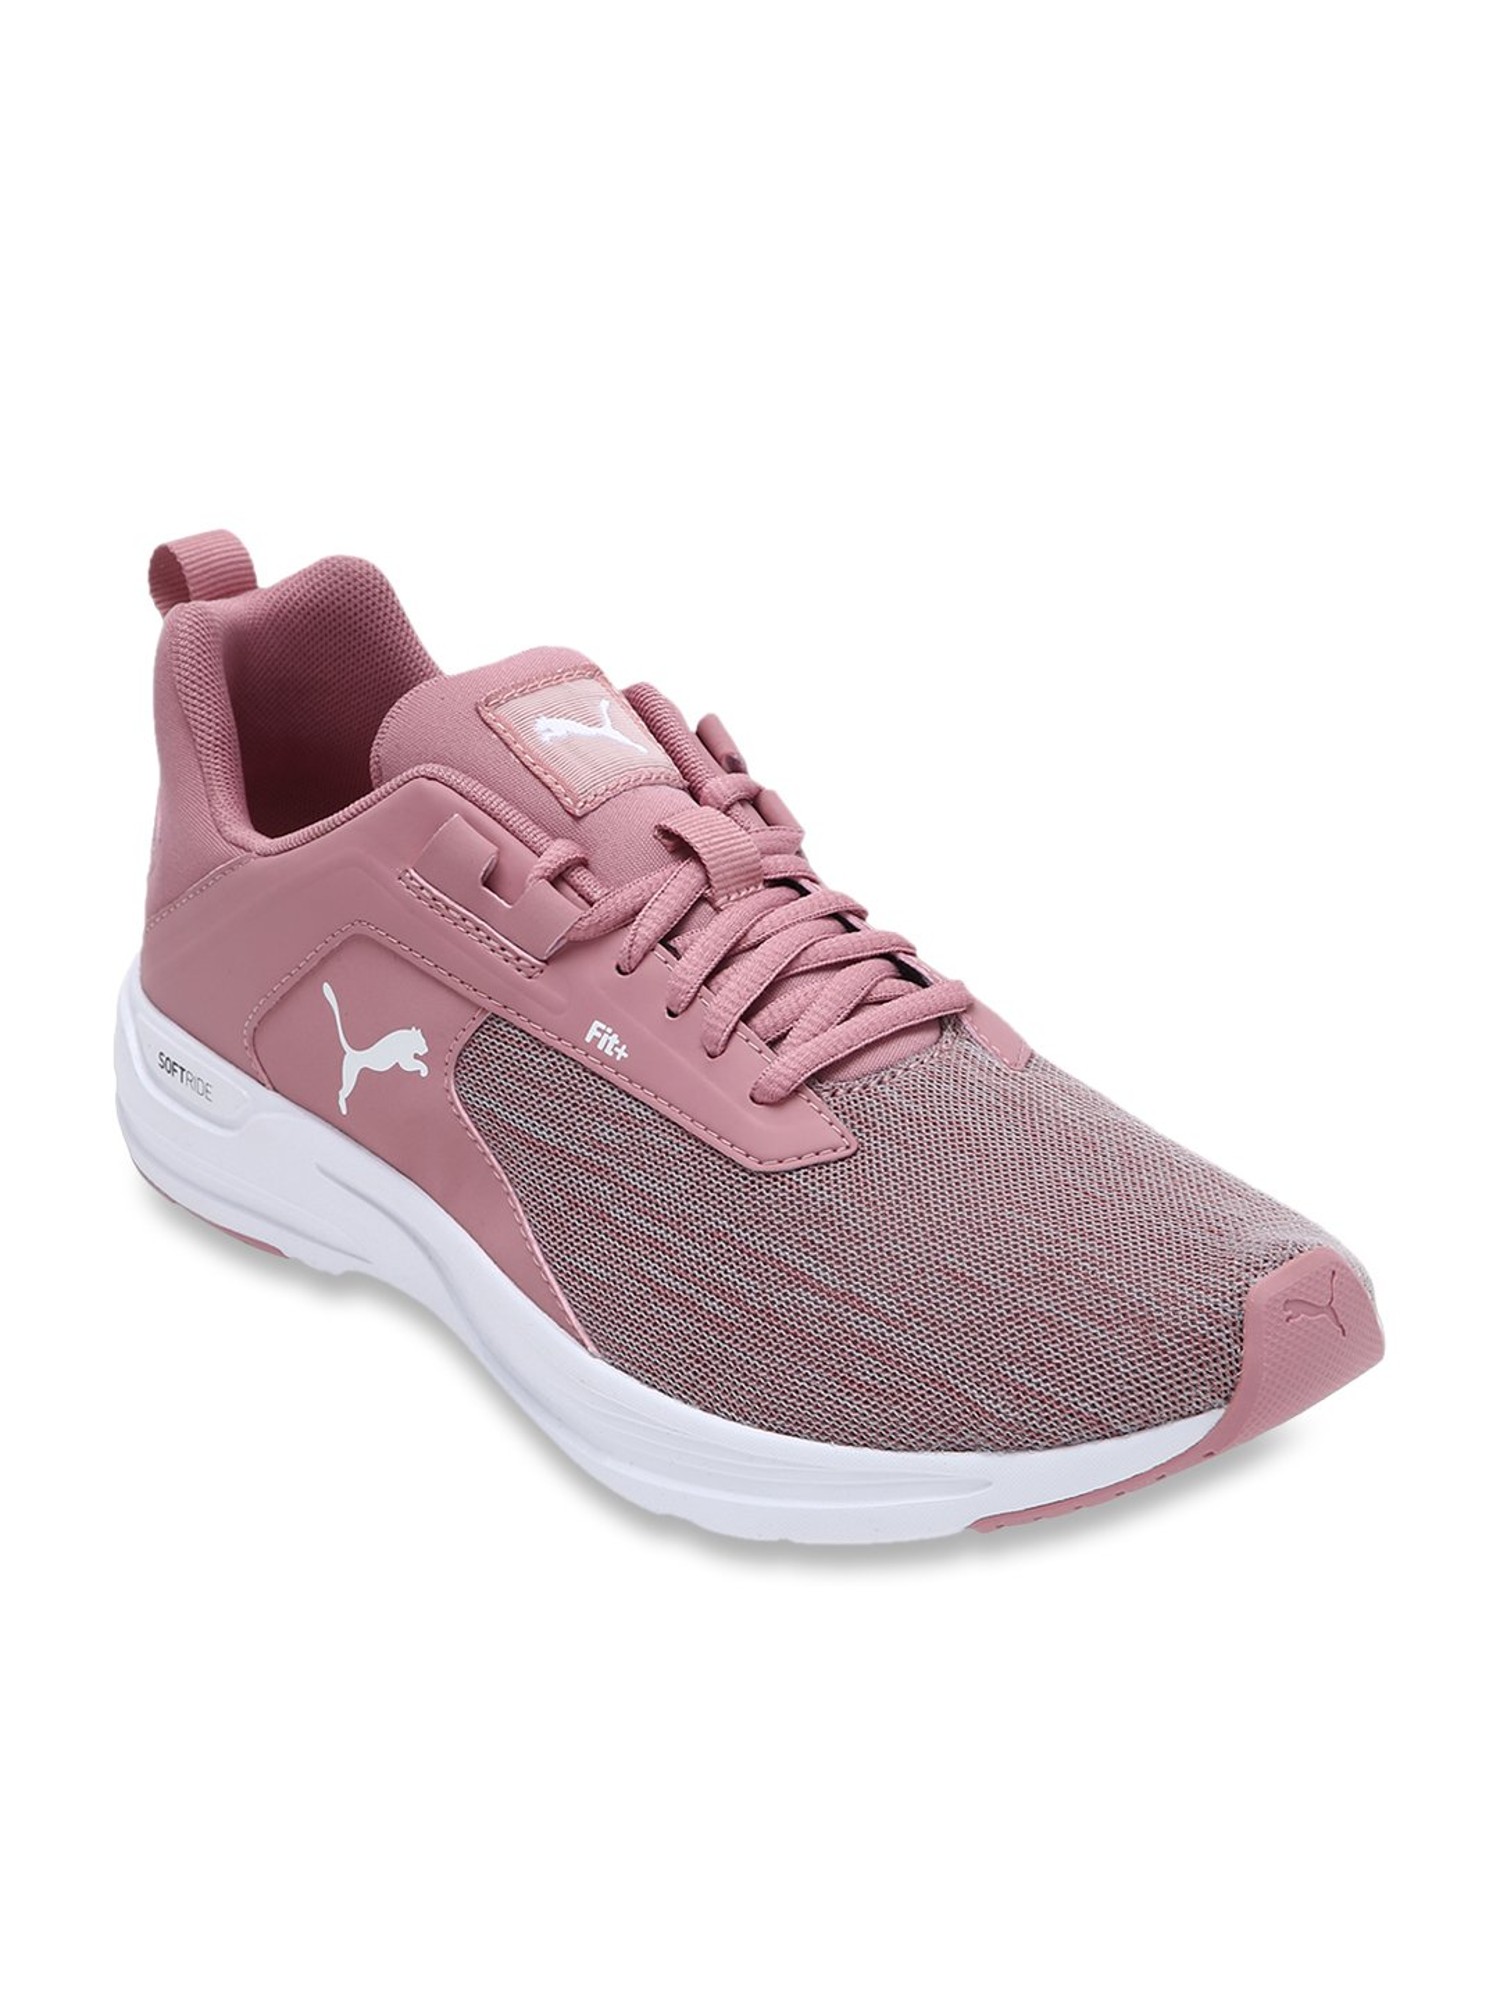 Buy Puma Comet for Best CLiQ Pink Men at Running Shoes @ 2 Price Tata Alt